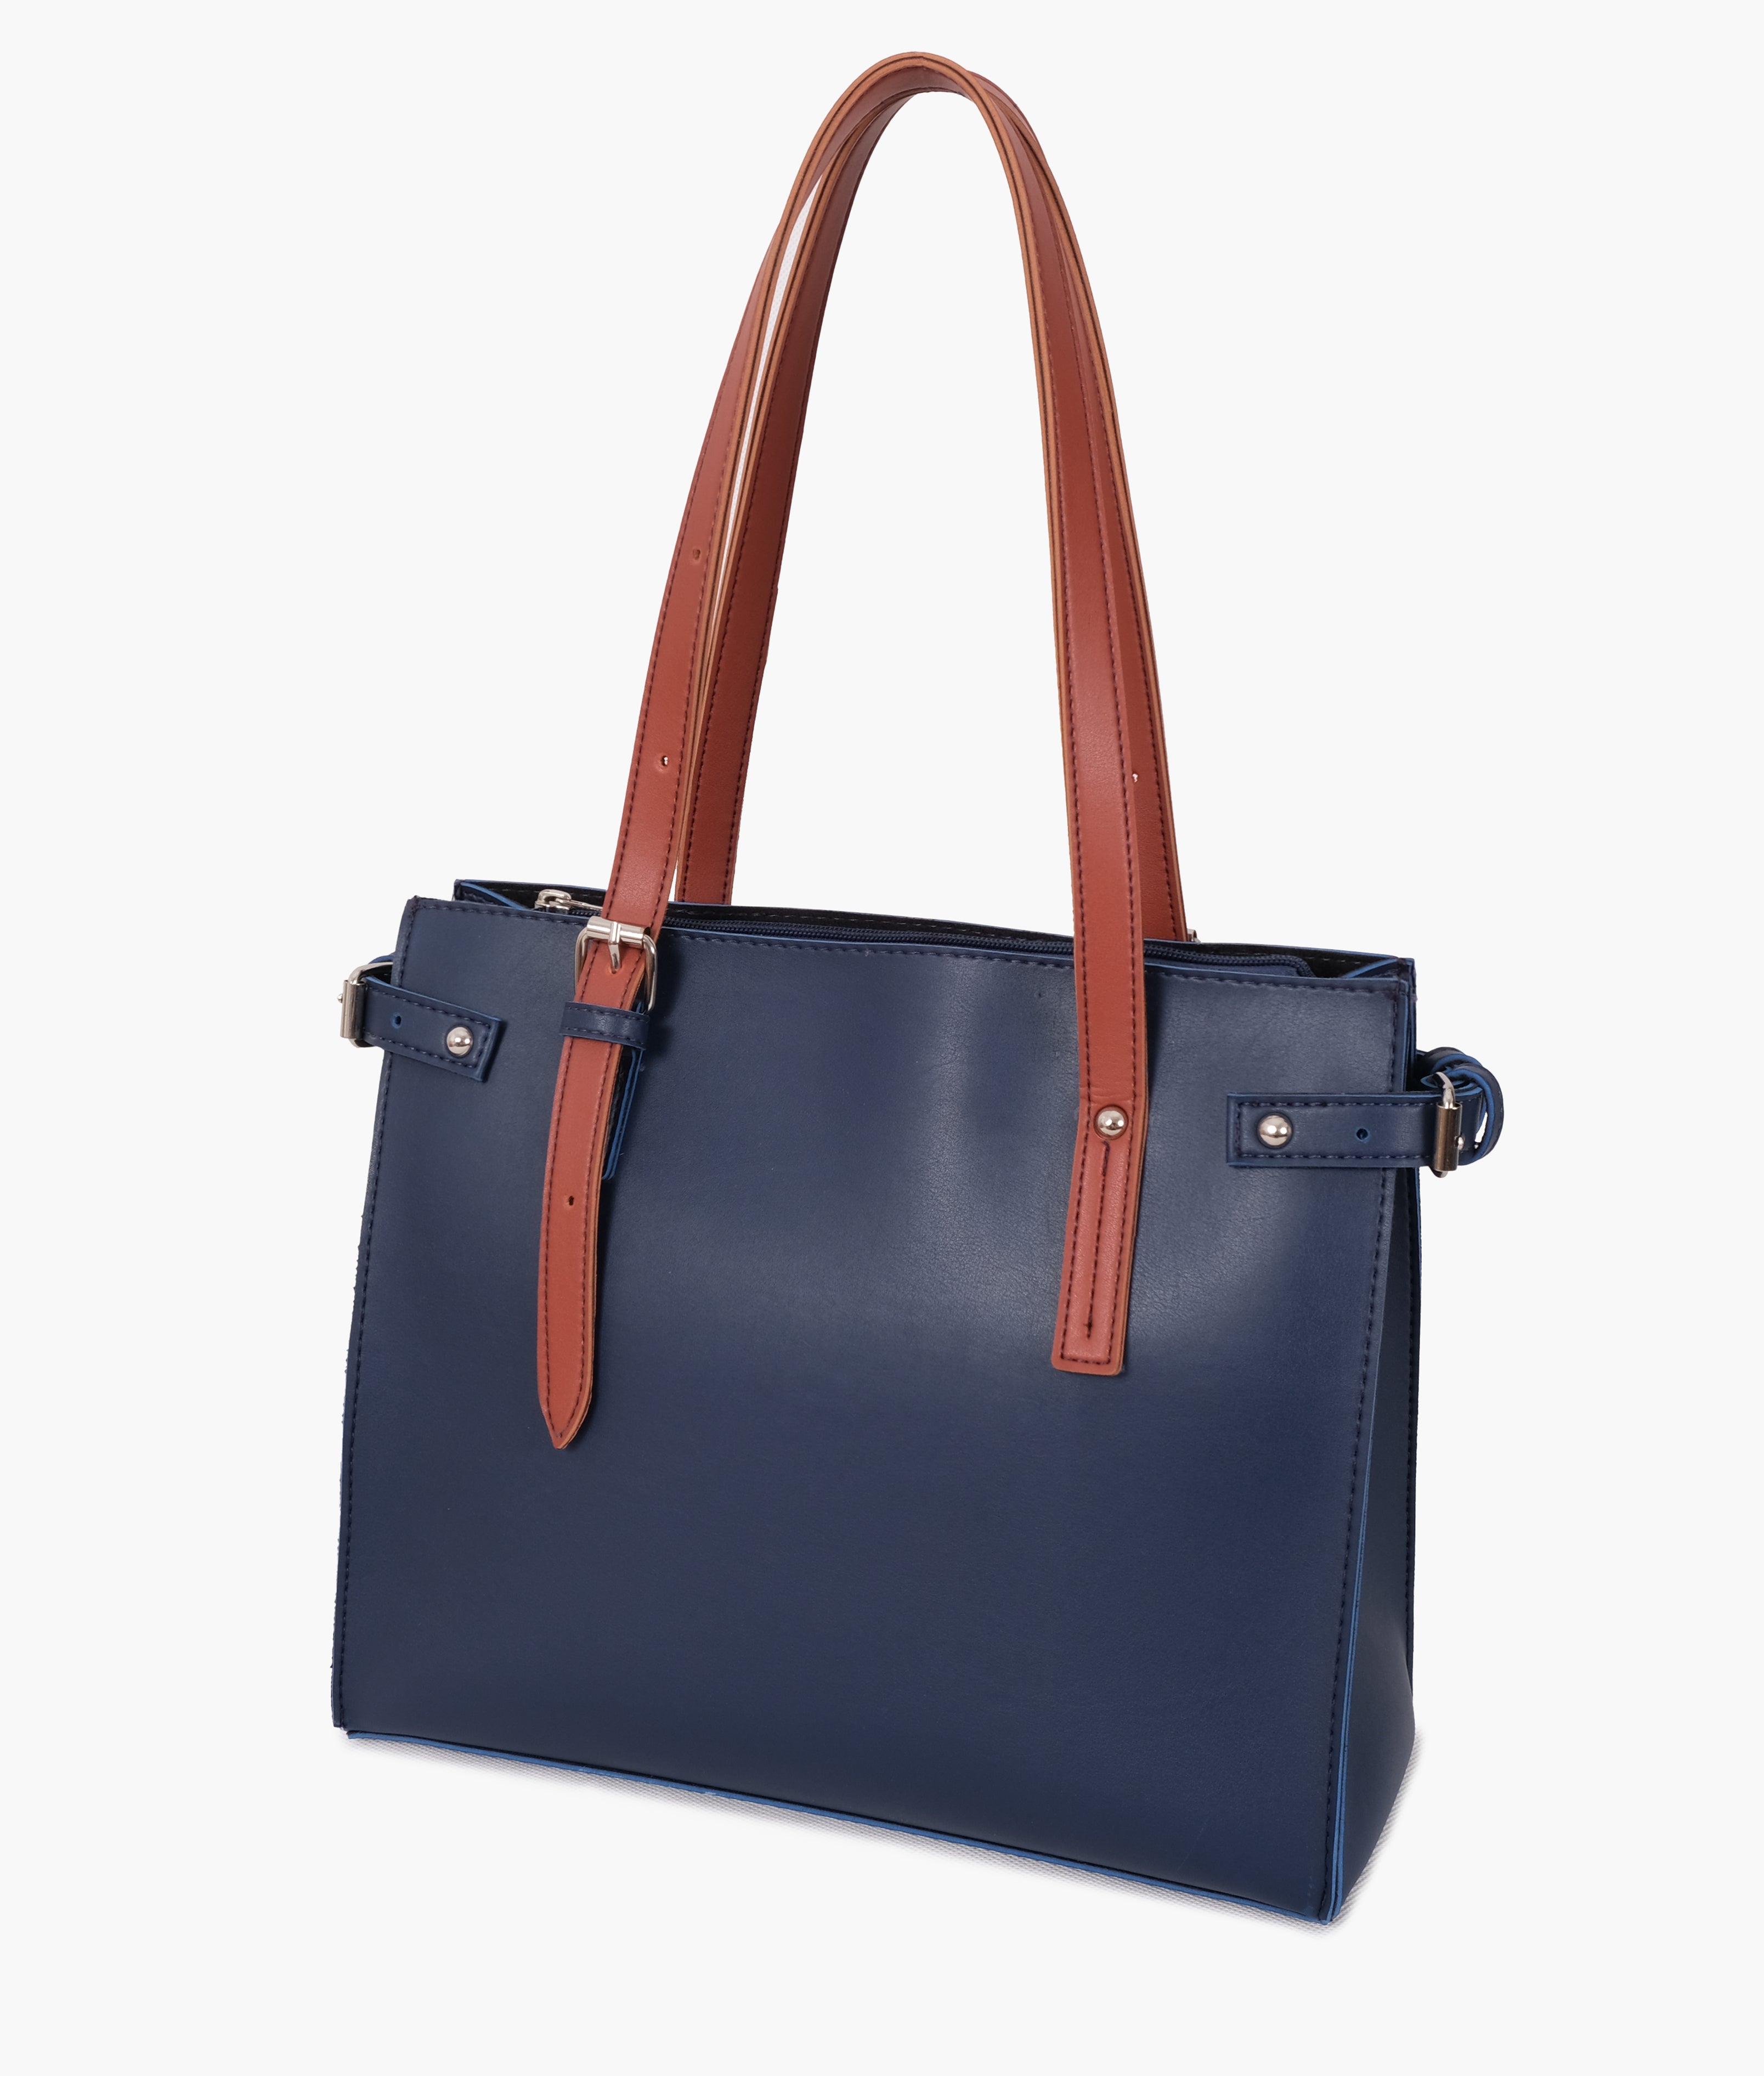 Blue satchel tote bag